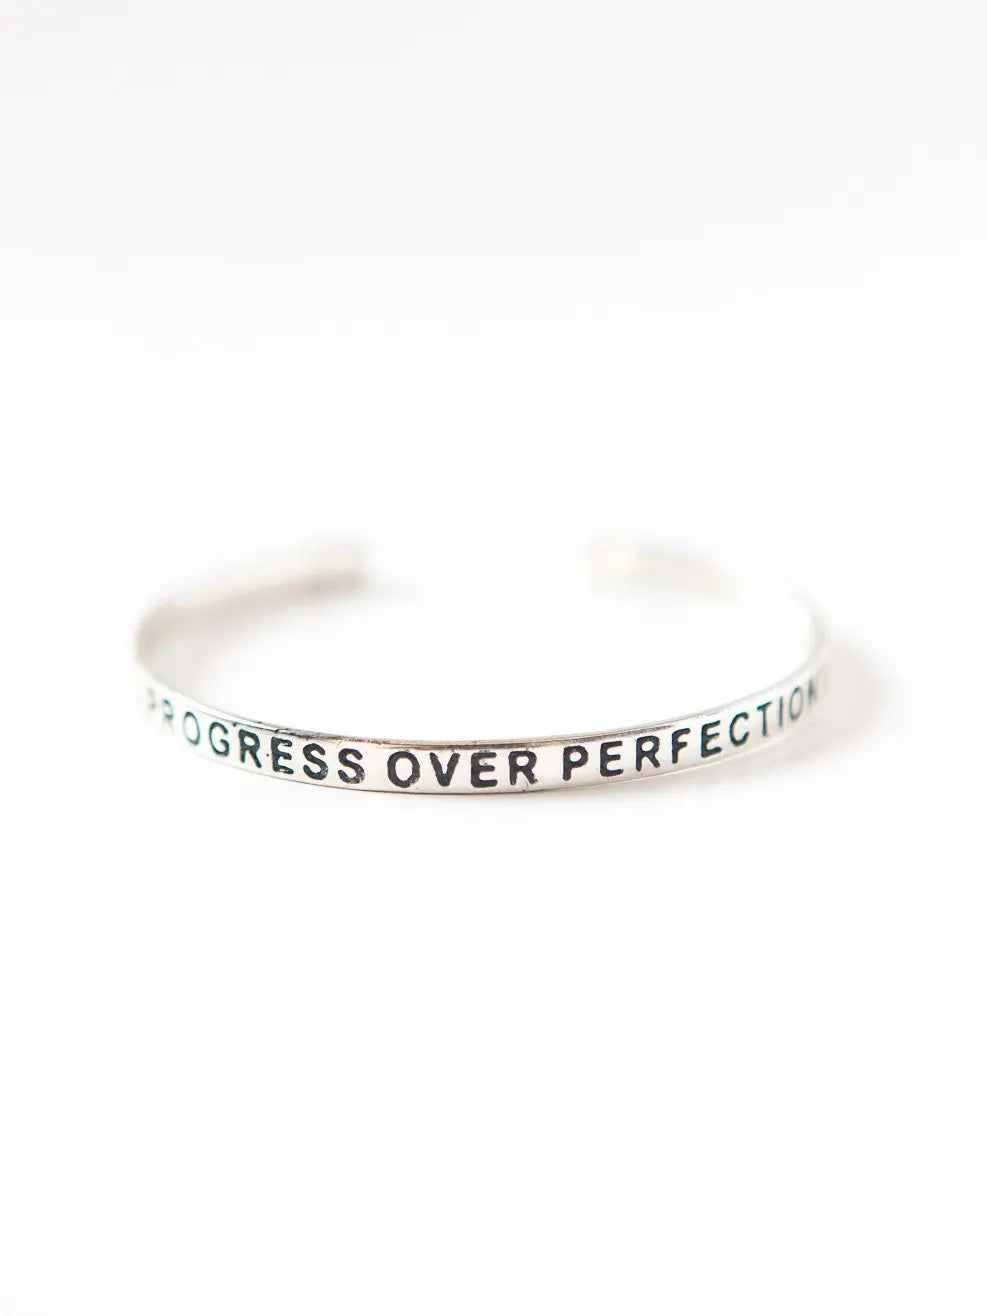 Silver Progress over perfection bracelet